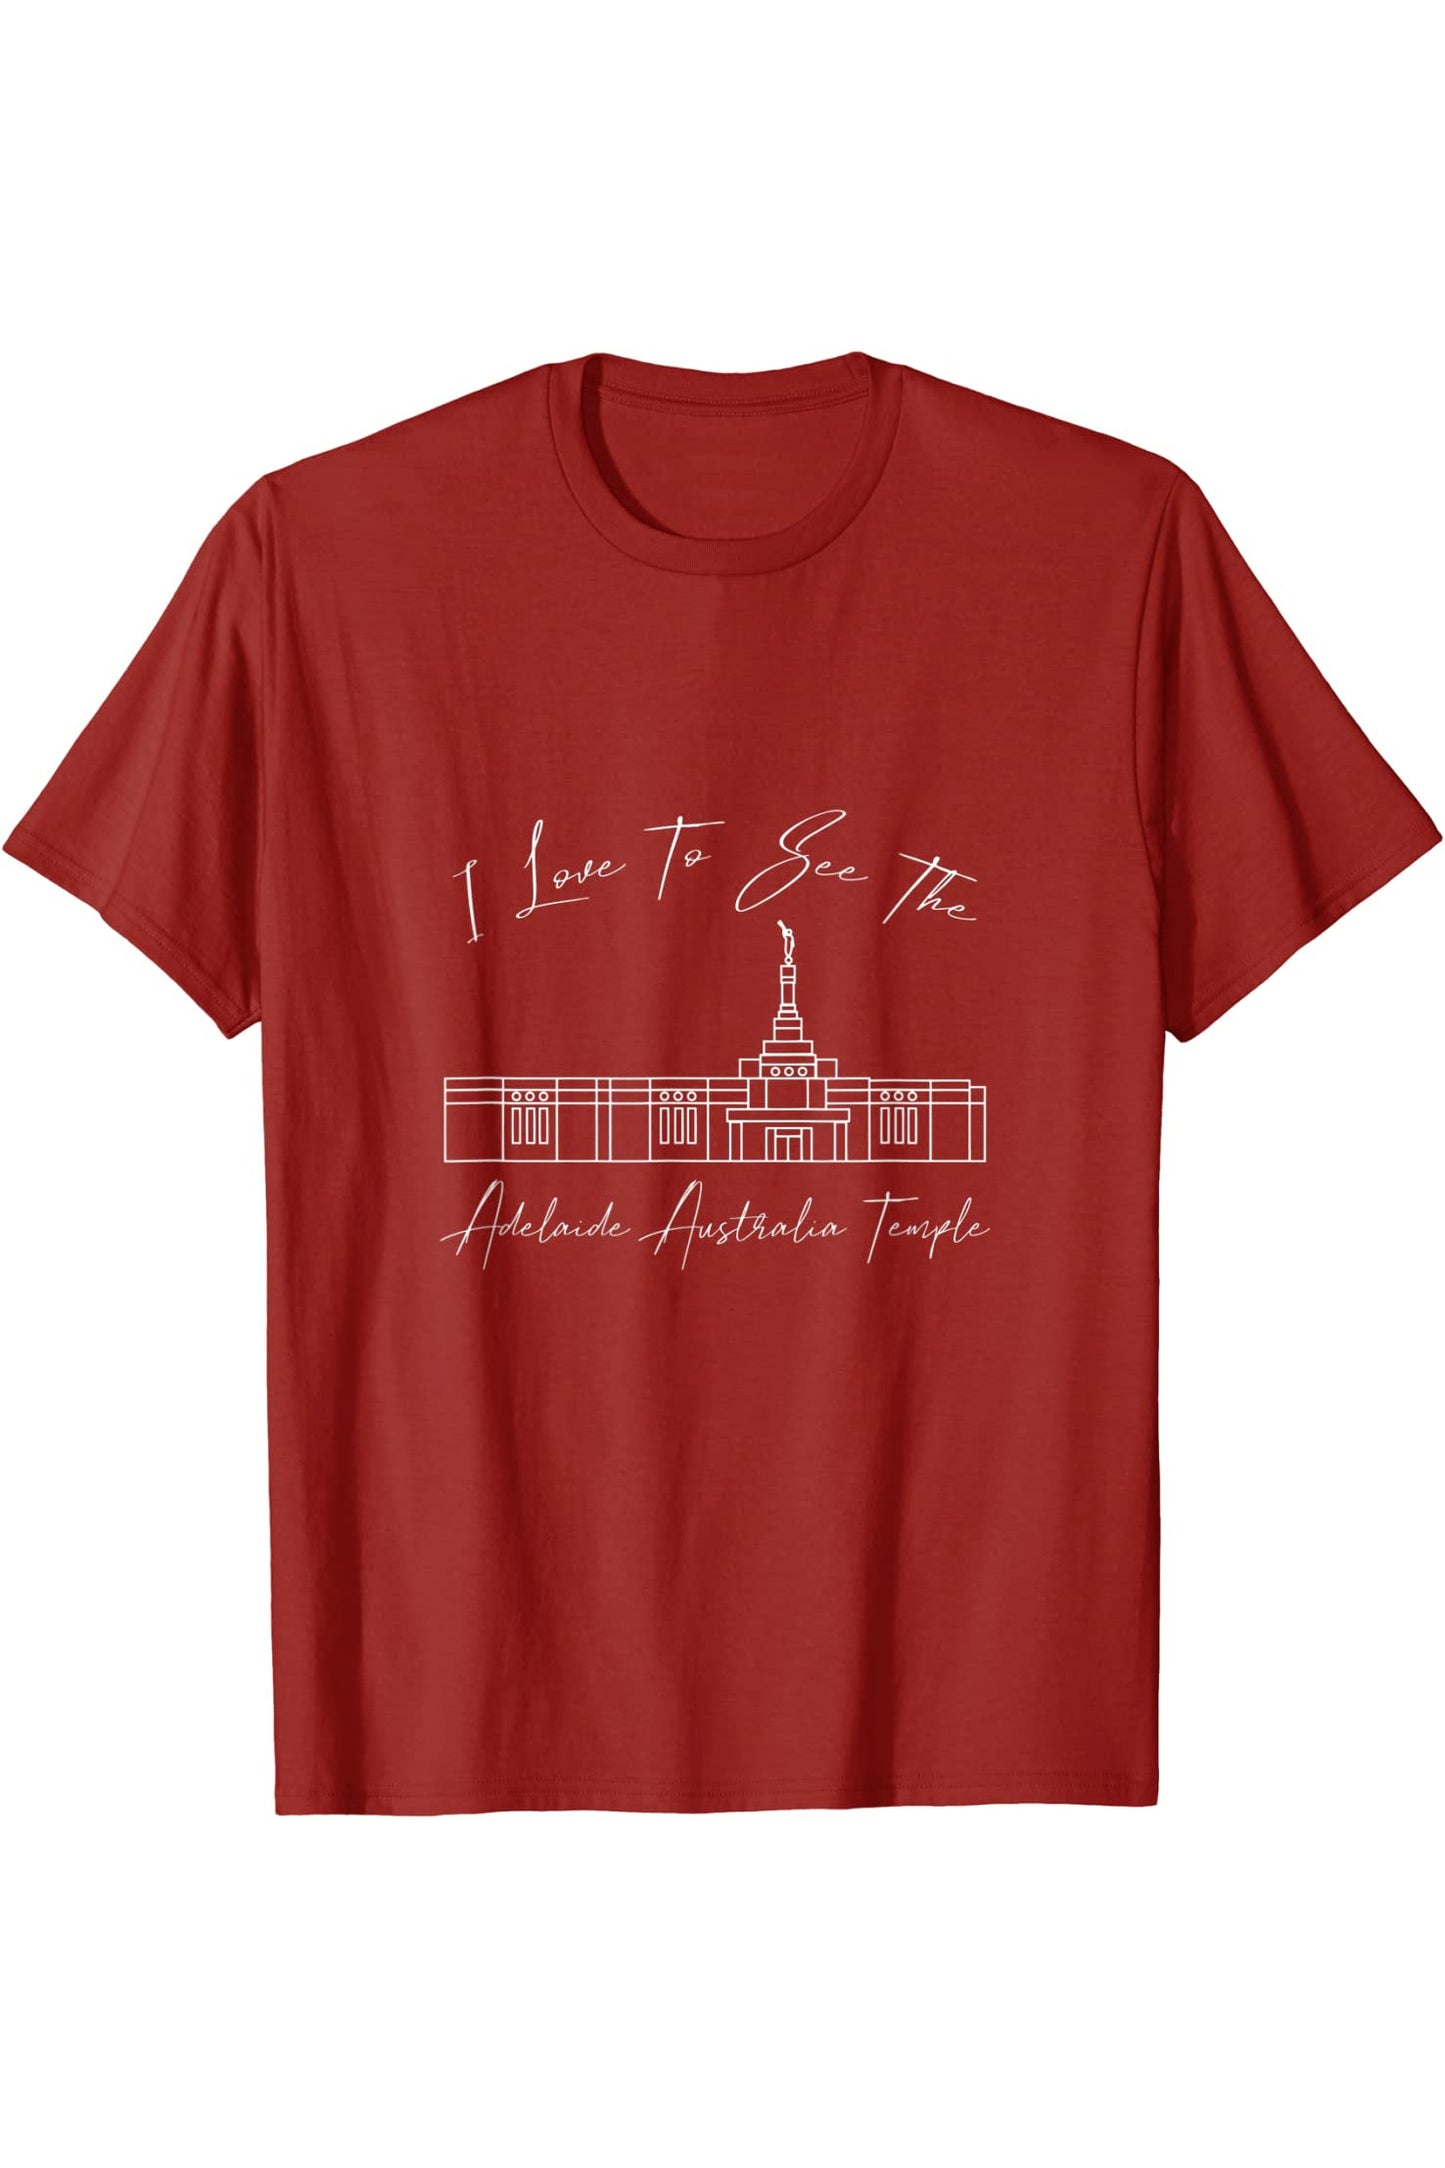 Adelaide Australia Temple T-Shirt - Calligraphy Style (English) US